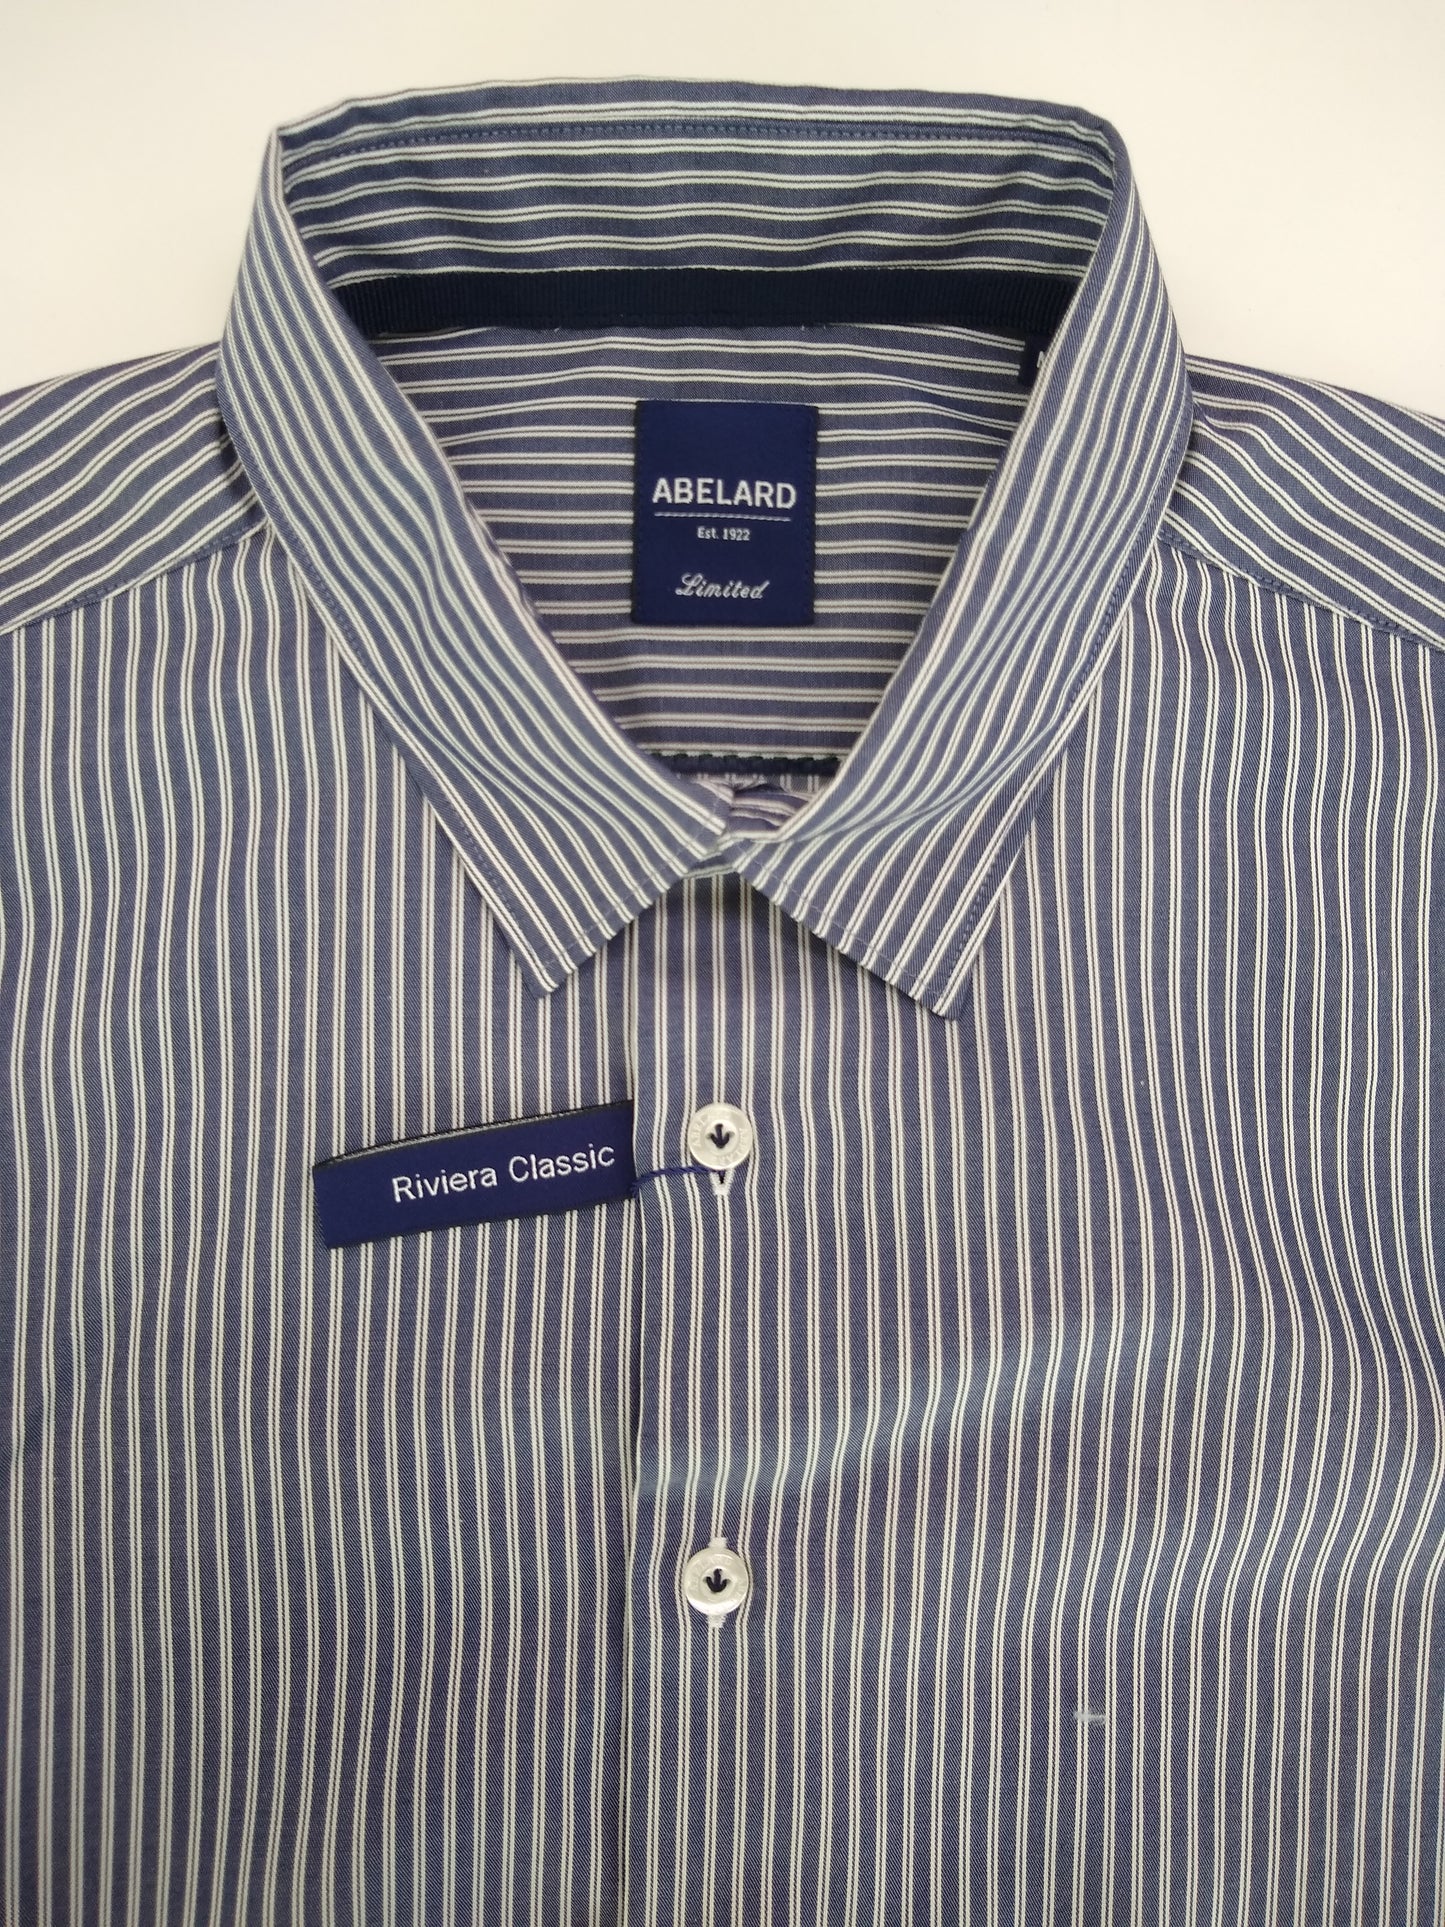 Abelard Fine Line Twill Stripe Long Sleeve Shirt - Navy